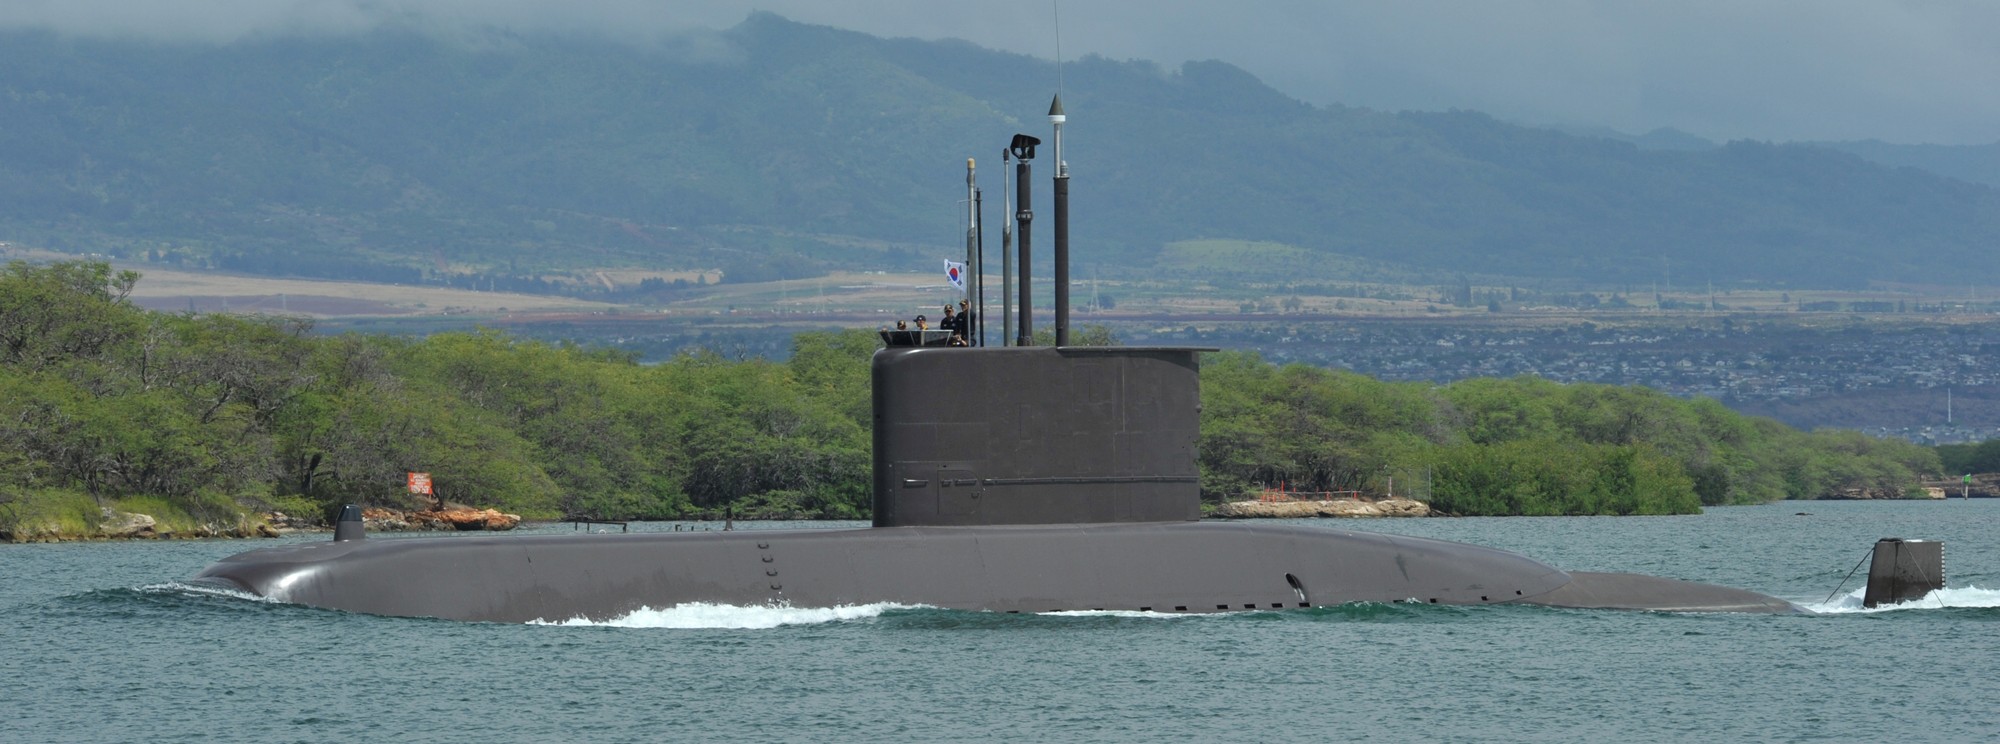 ss-069 roks na daeyong jang bogo class kss-i type 209-1200 attack submarine republic of korea navy rokn 533mm sut torpedo ugm-84 harpoon ssm 02